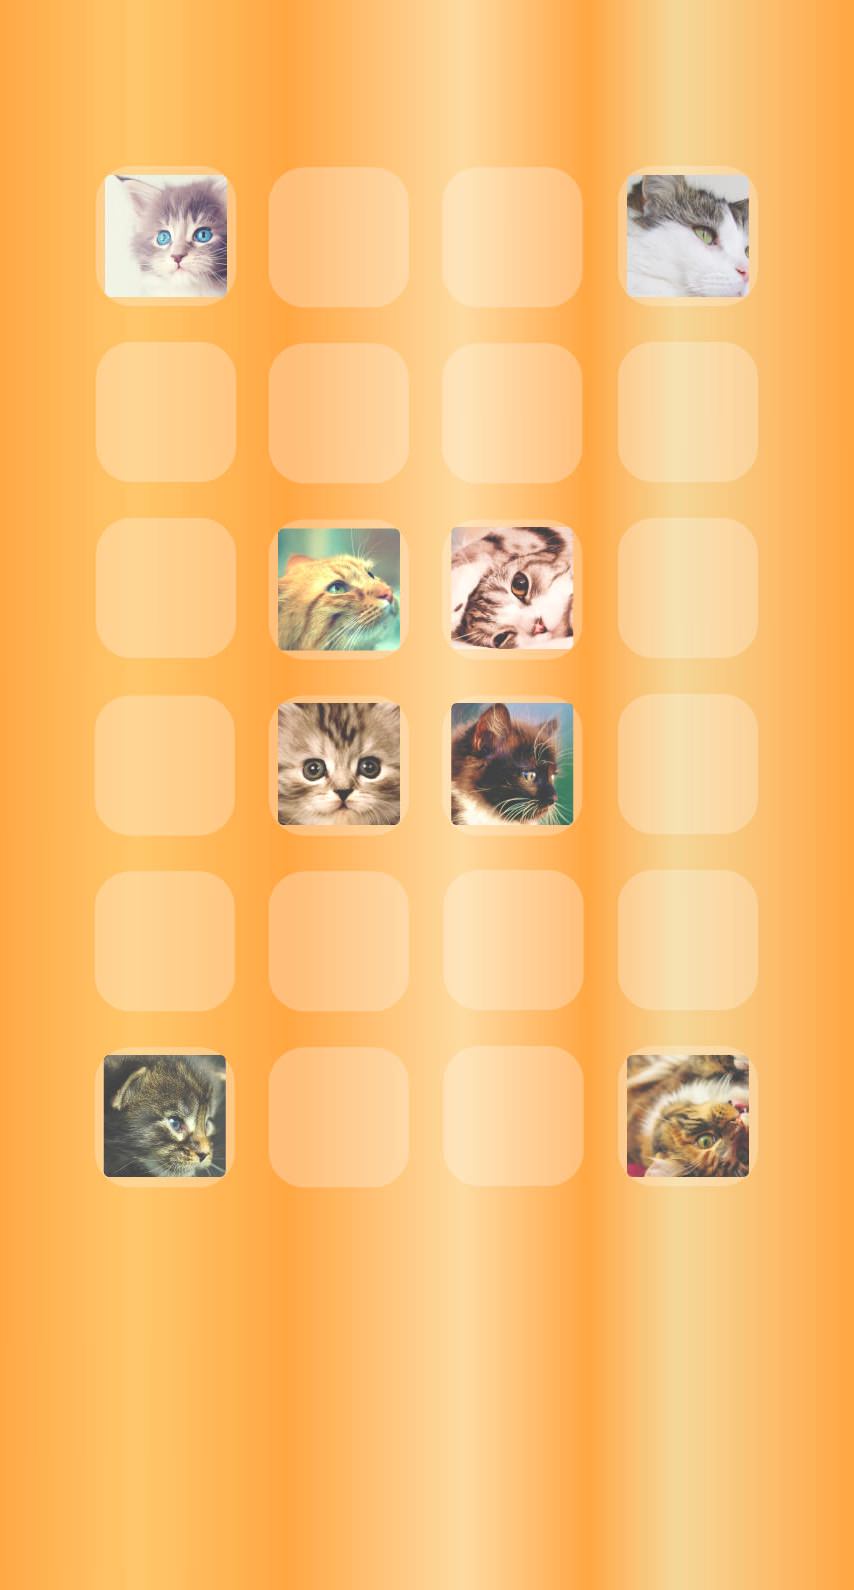 棚猫橙 Wallpaper Sc Iphone6s壁紙